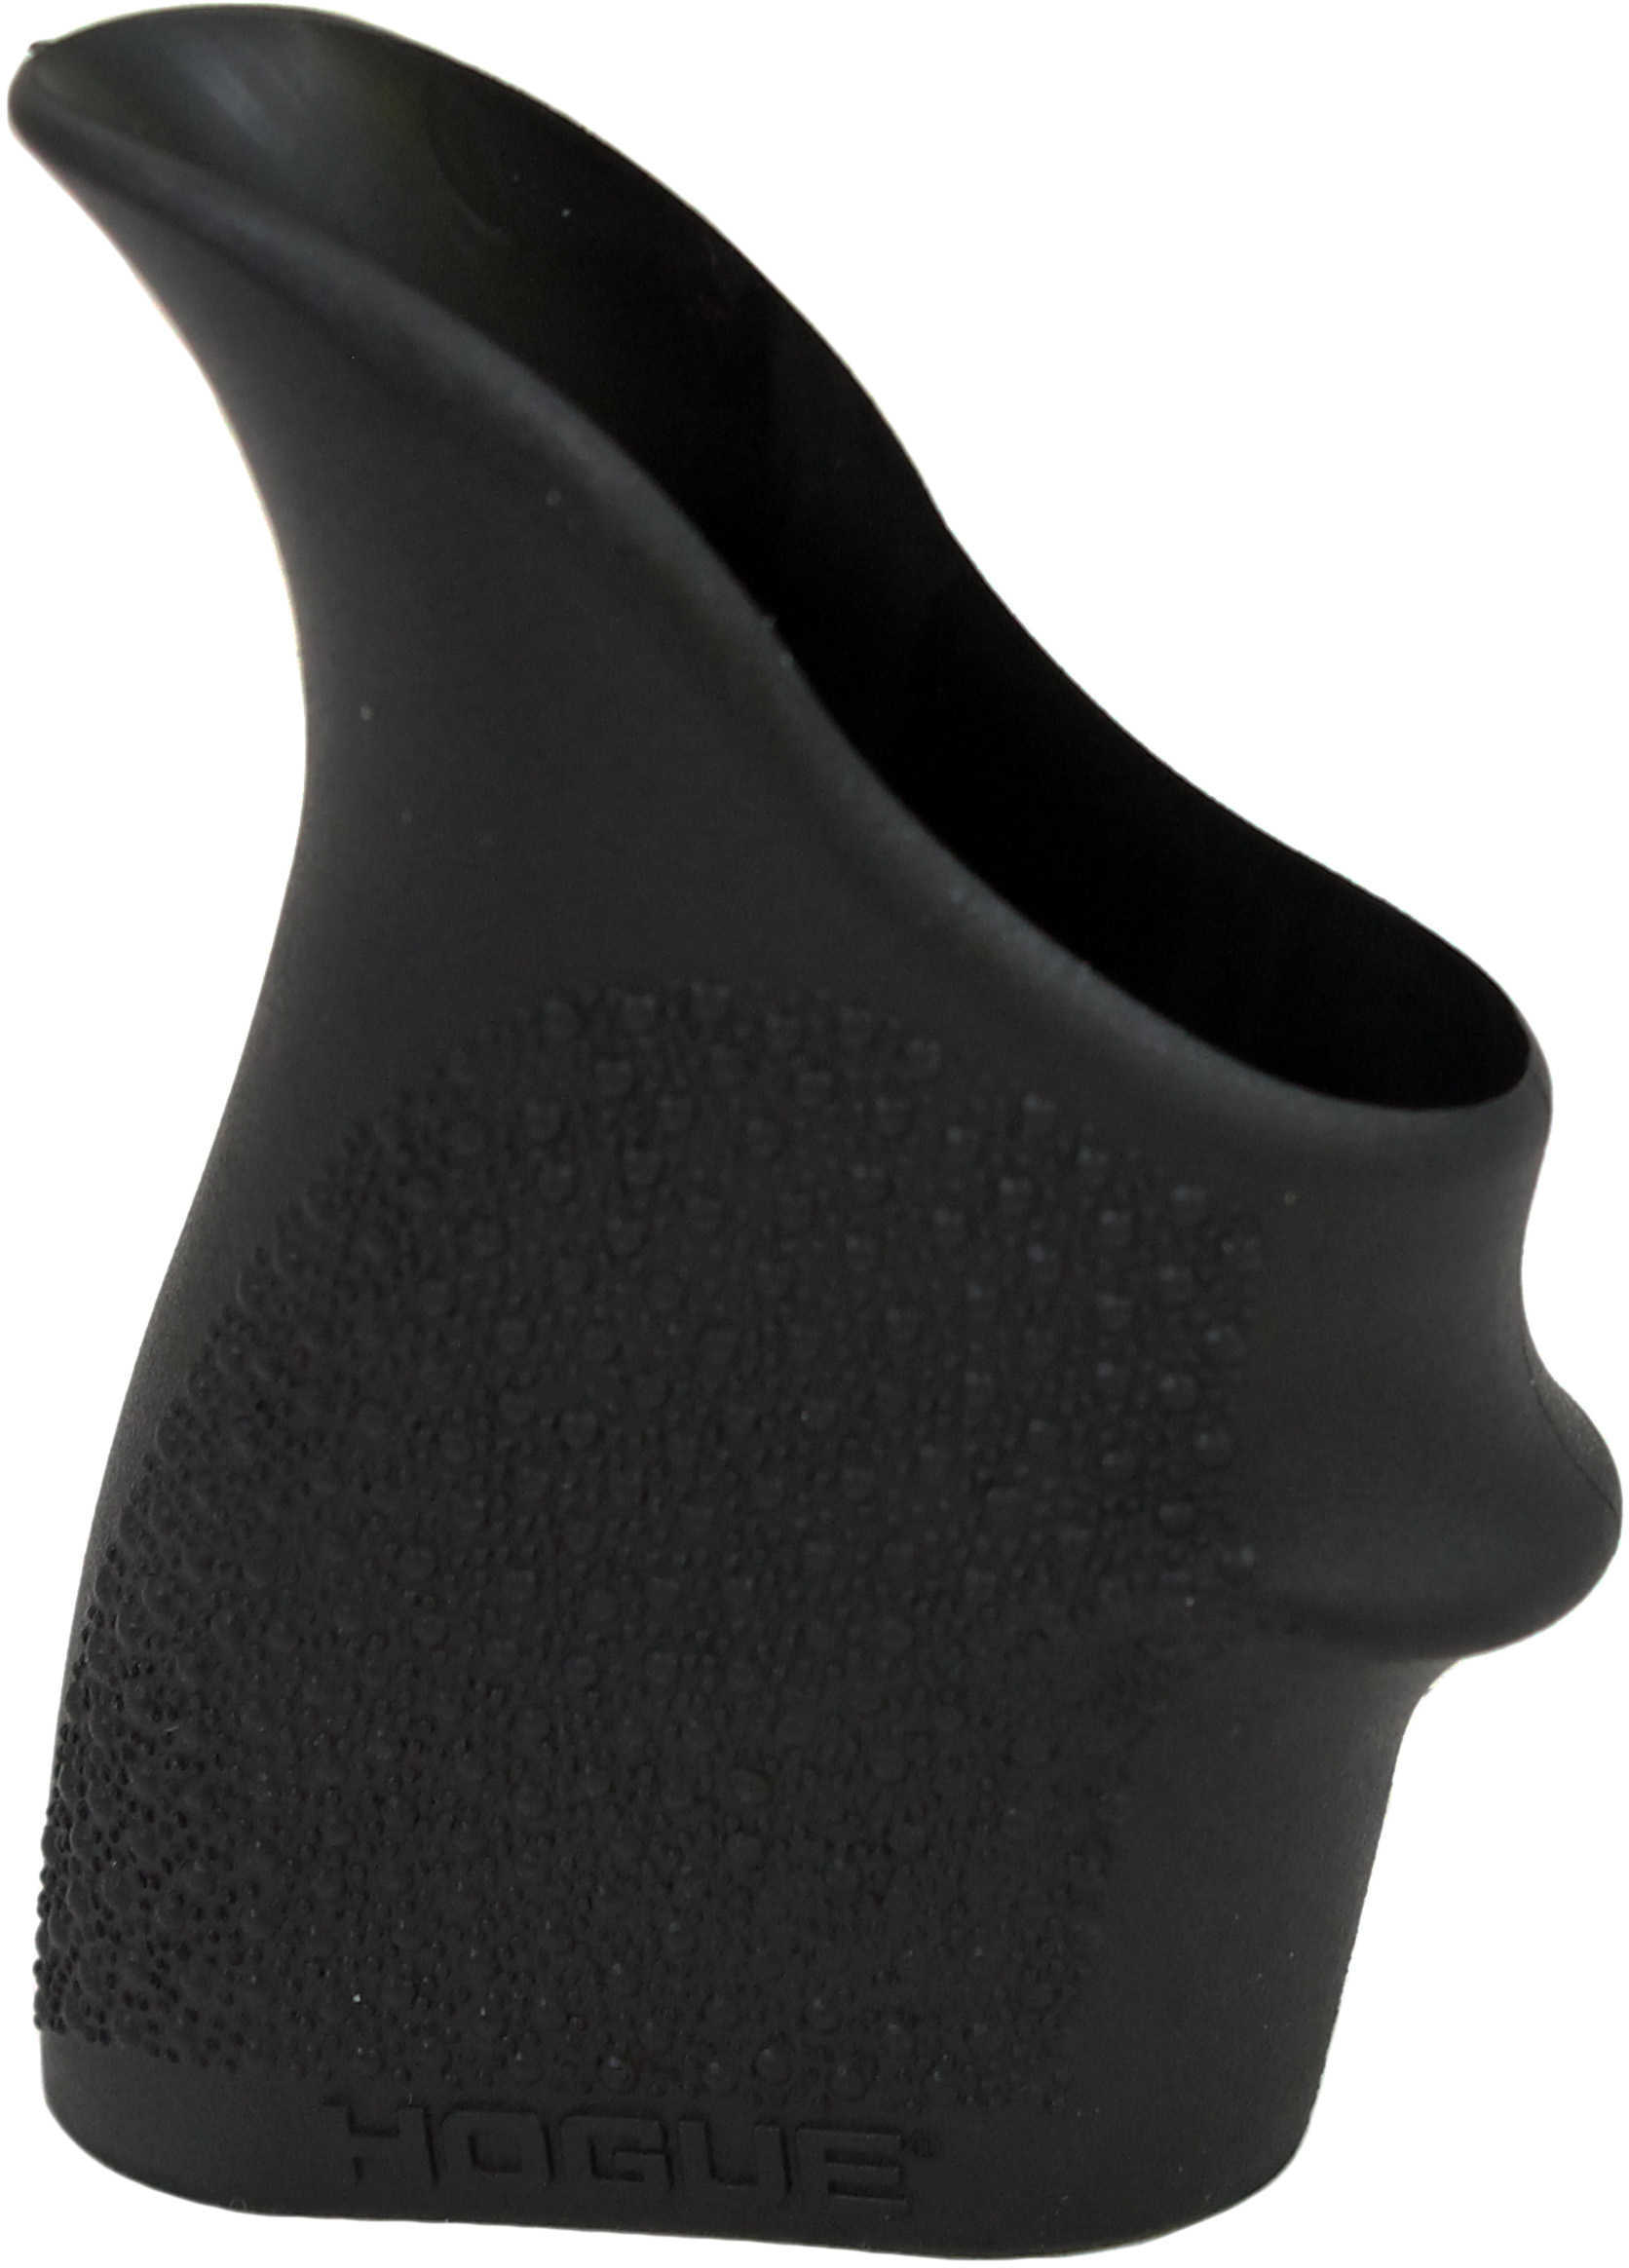 Hogue 18300 HandAll Beavertail Grip Sleeve S&W Shield 45; Kahr P9/40, CW9/40 Textured Rubber Black